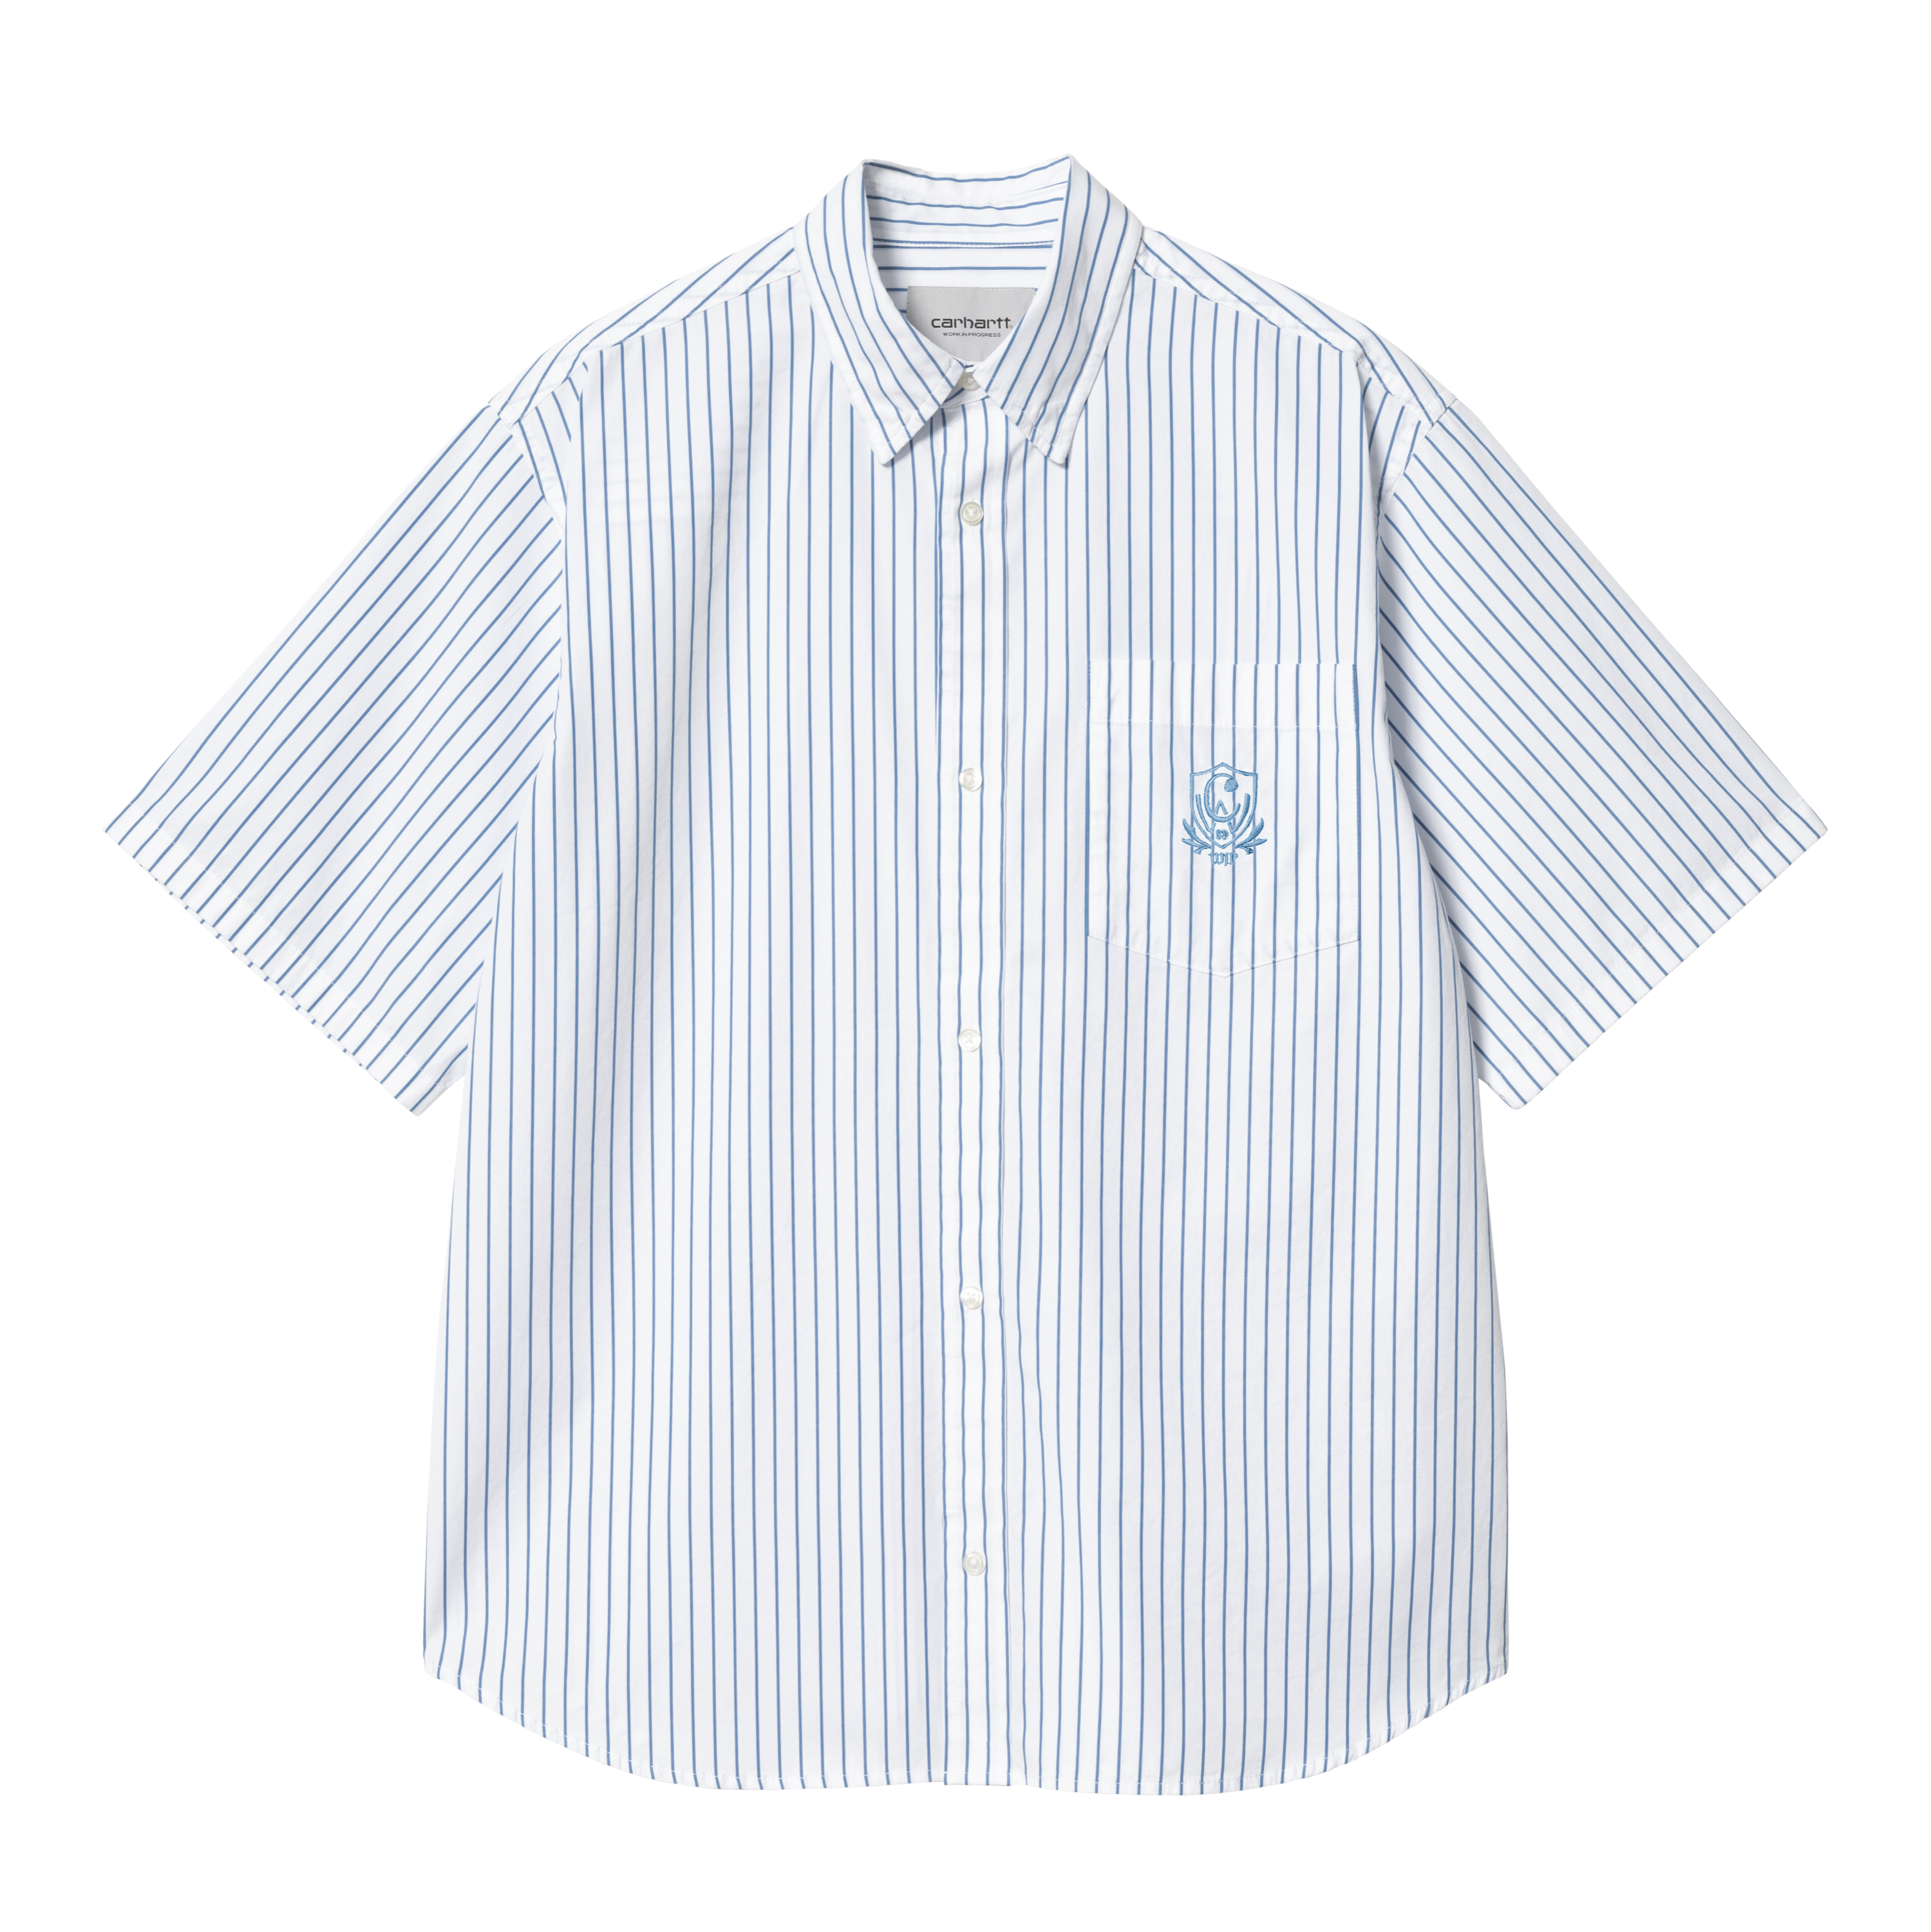 Carhartt WIP Short Sleeve Linus Shirt in Bianco